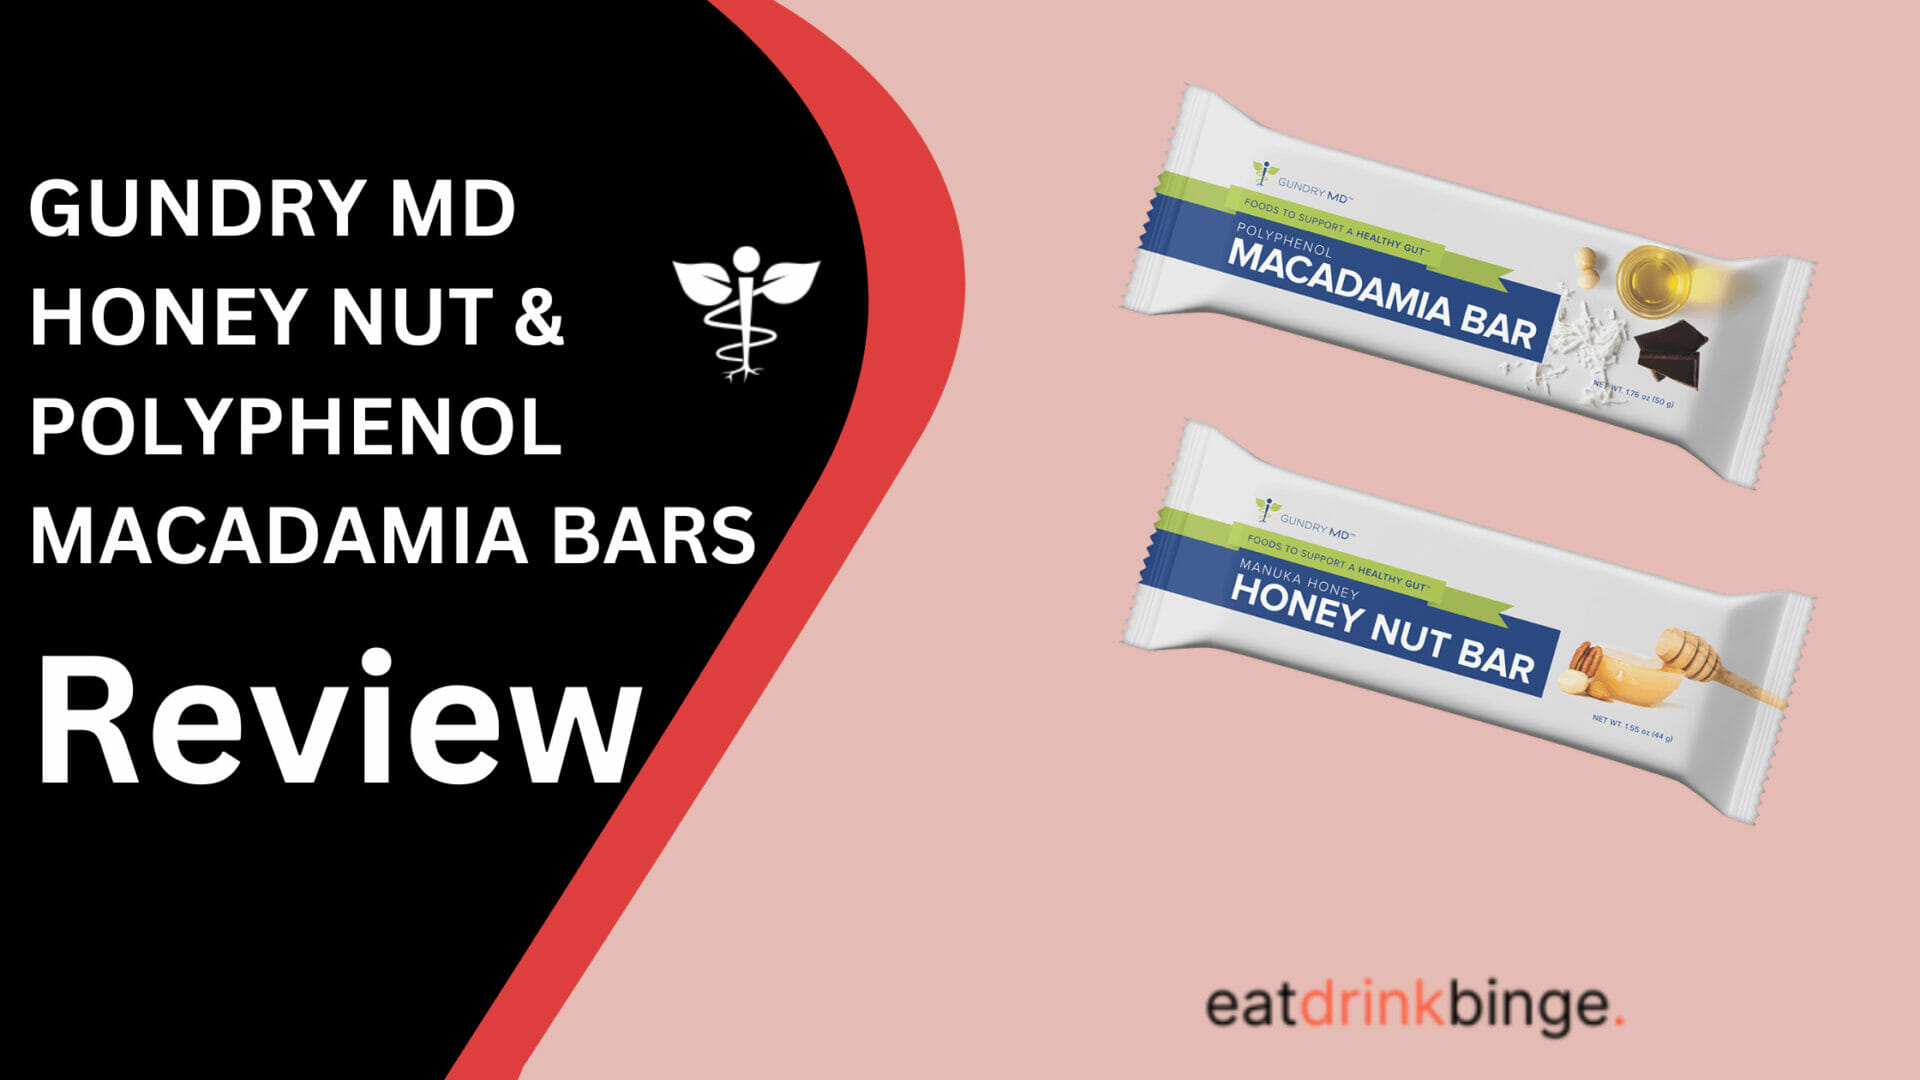 Gundry MD Honey Nut & Polyphenol Macadamia Bars Featured Image